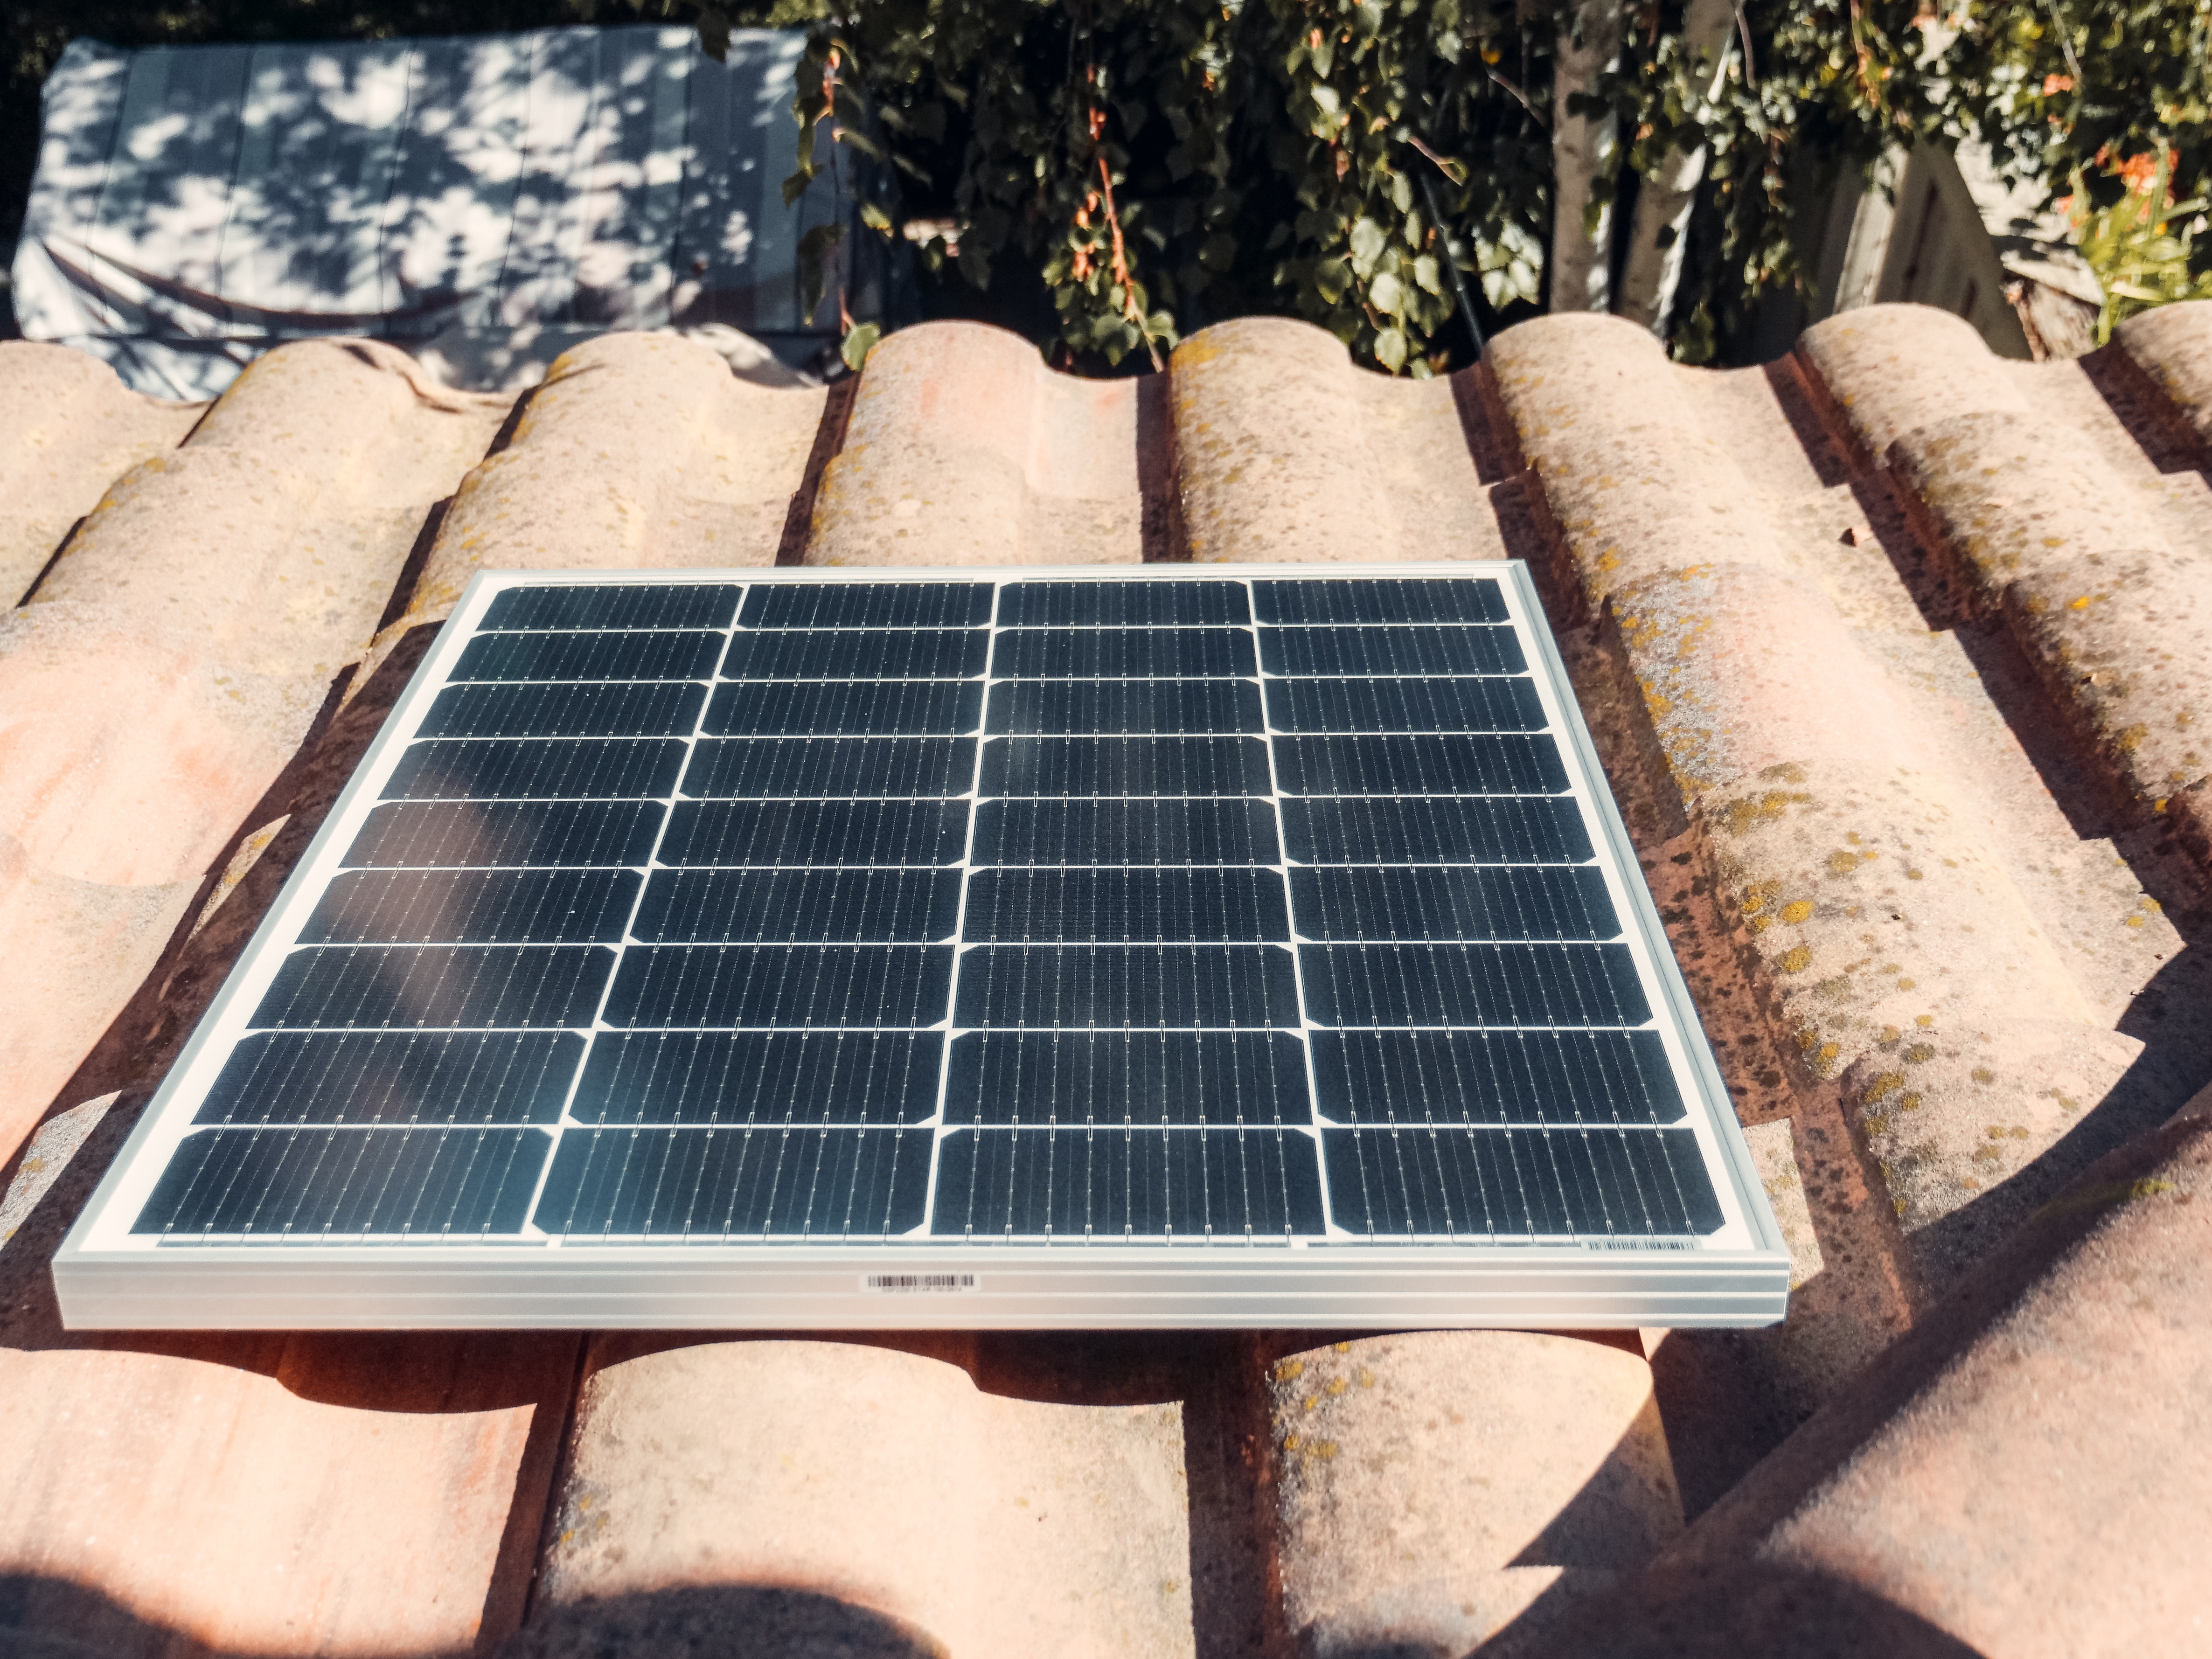 PEXELS | Panel de energía solar.